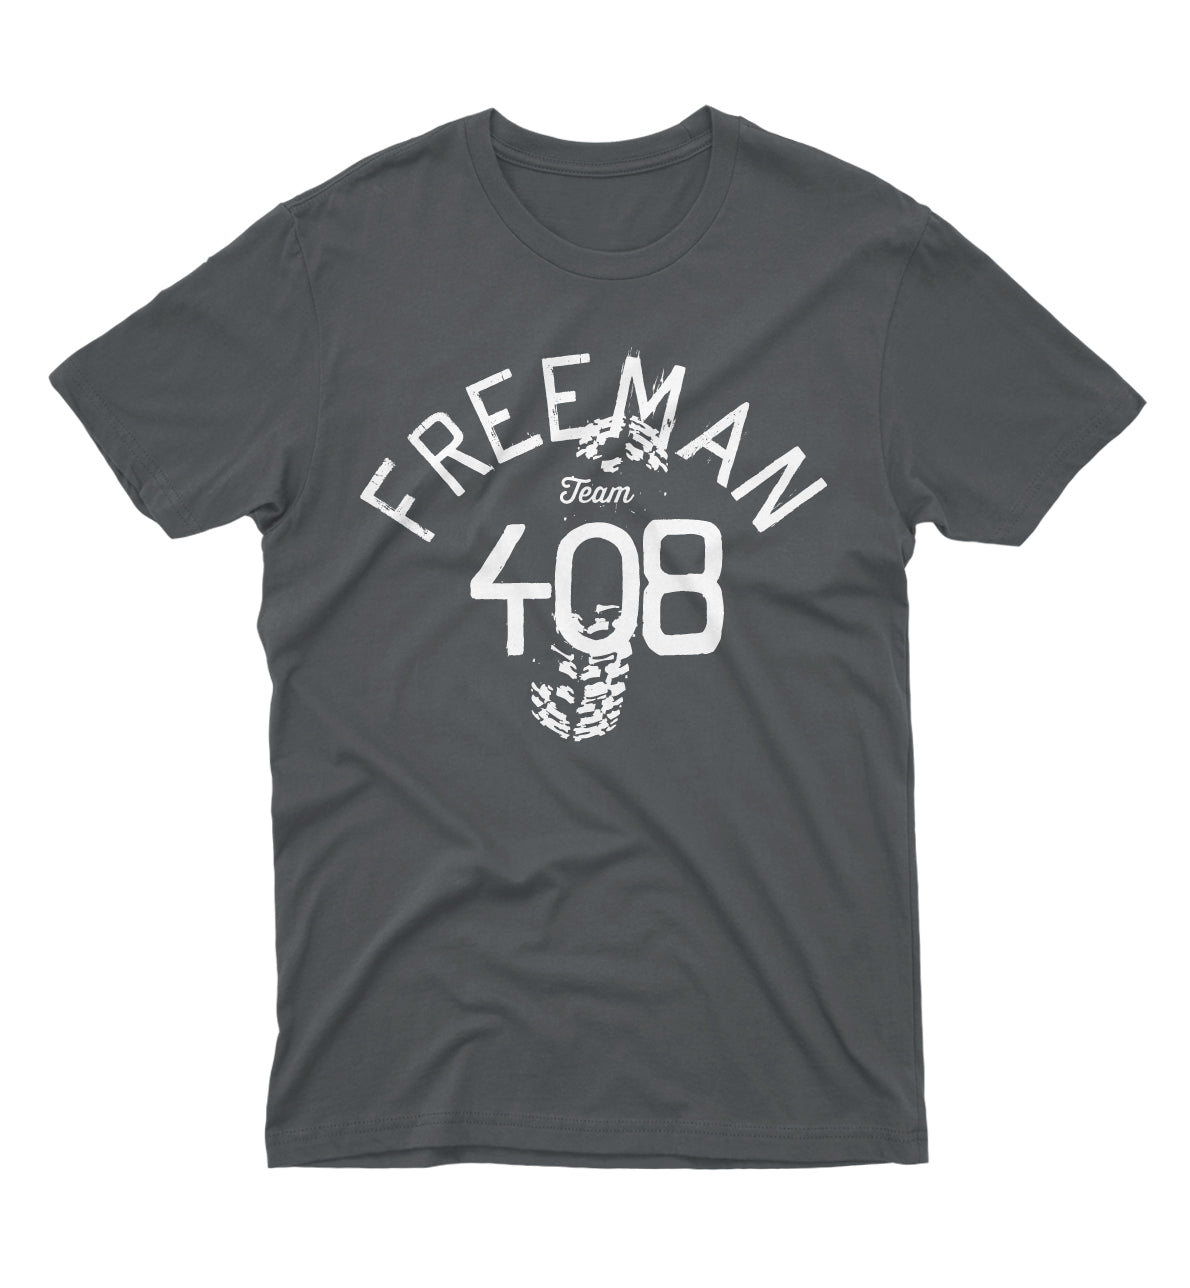 Freeman 408 Tire Mens Tee